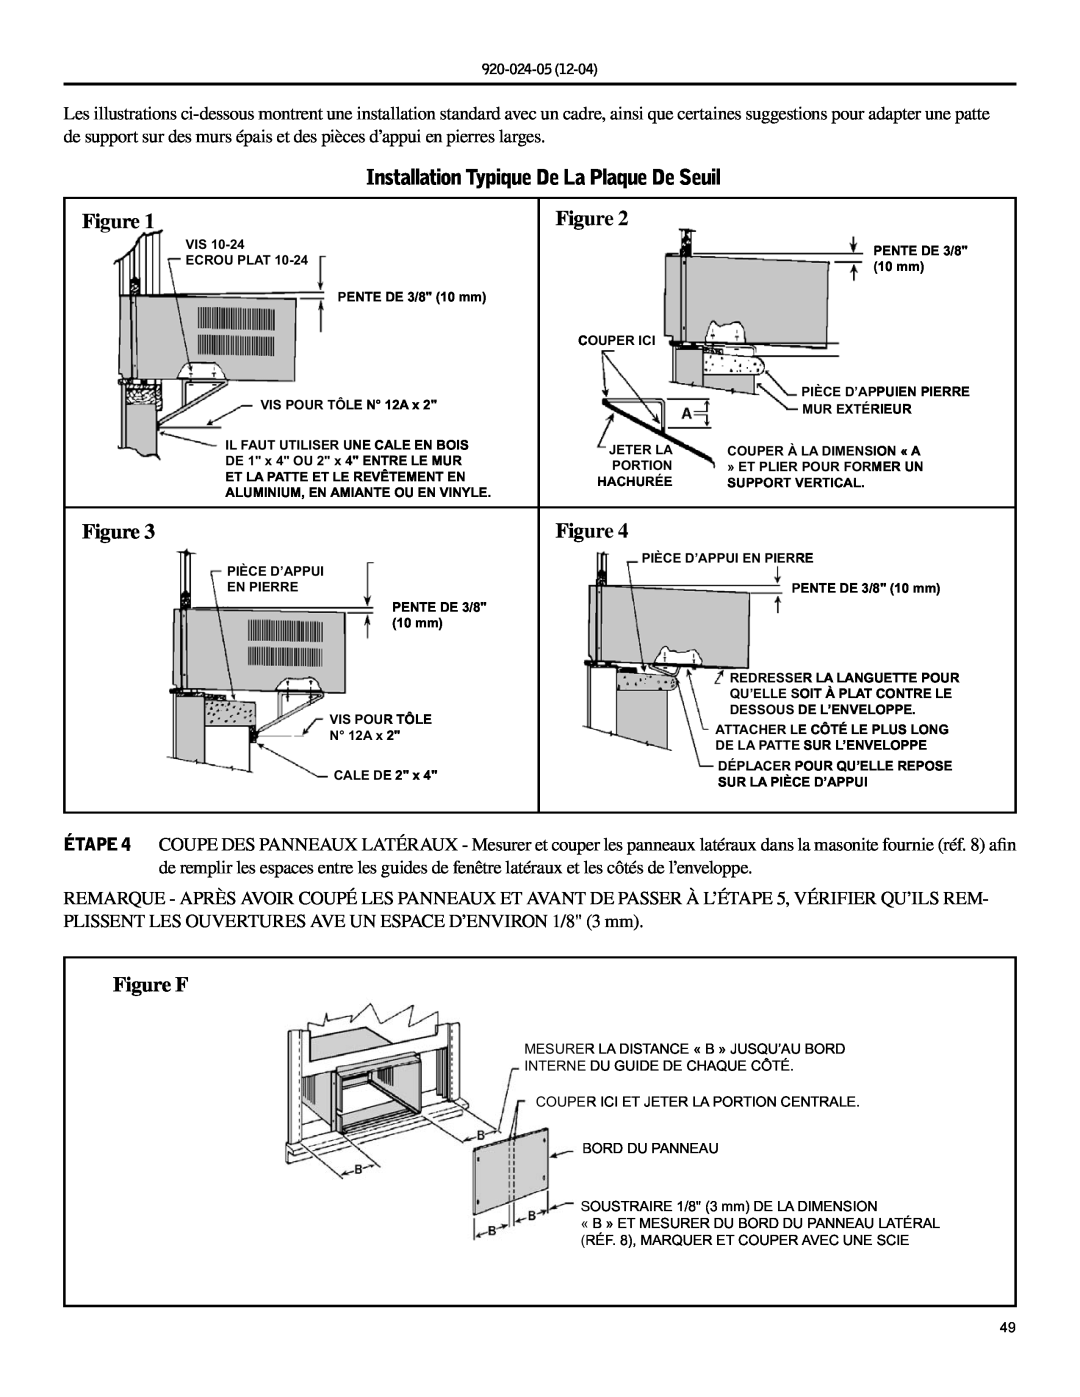 Friedrich SH20, SH15 operation manual Installation Typique De La Plaque De Seuil, Figure F 